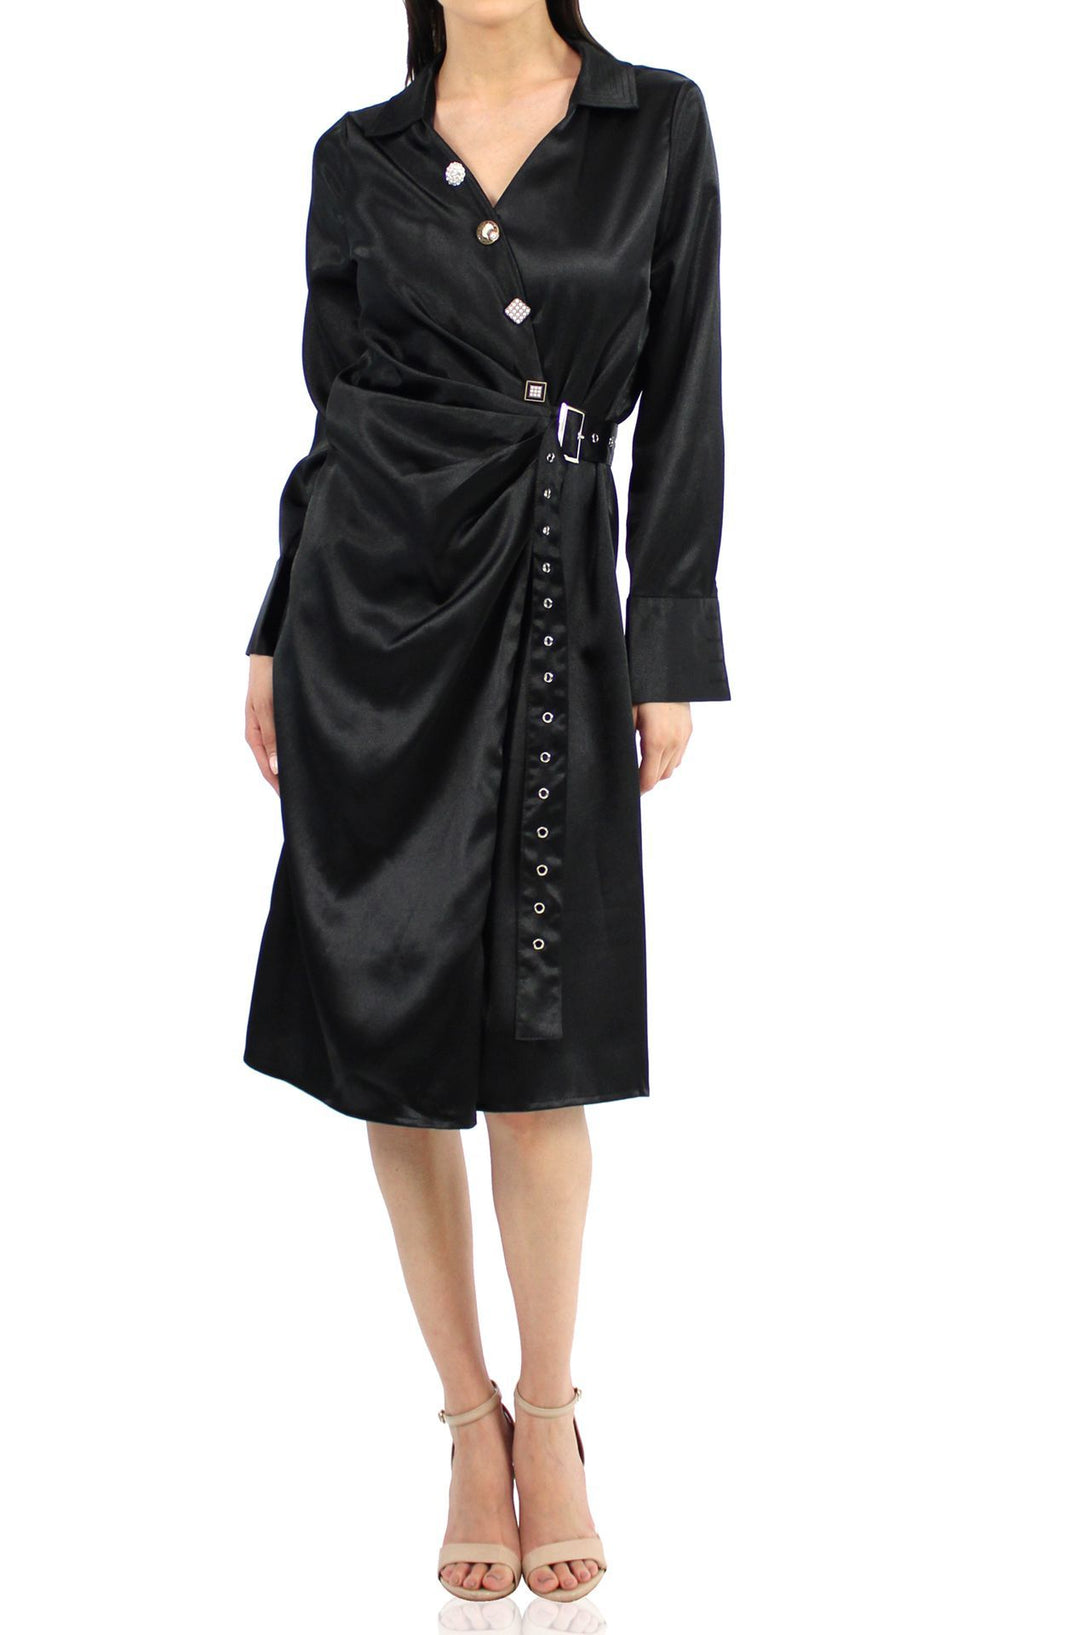 Women-Designer-Dress-In-Solid-Black-By-Kyle-Richard